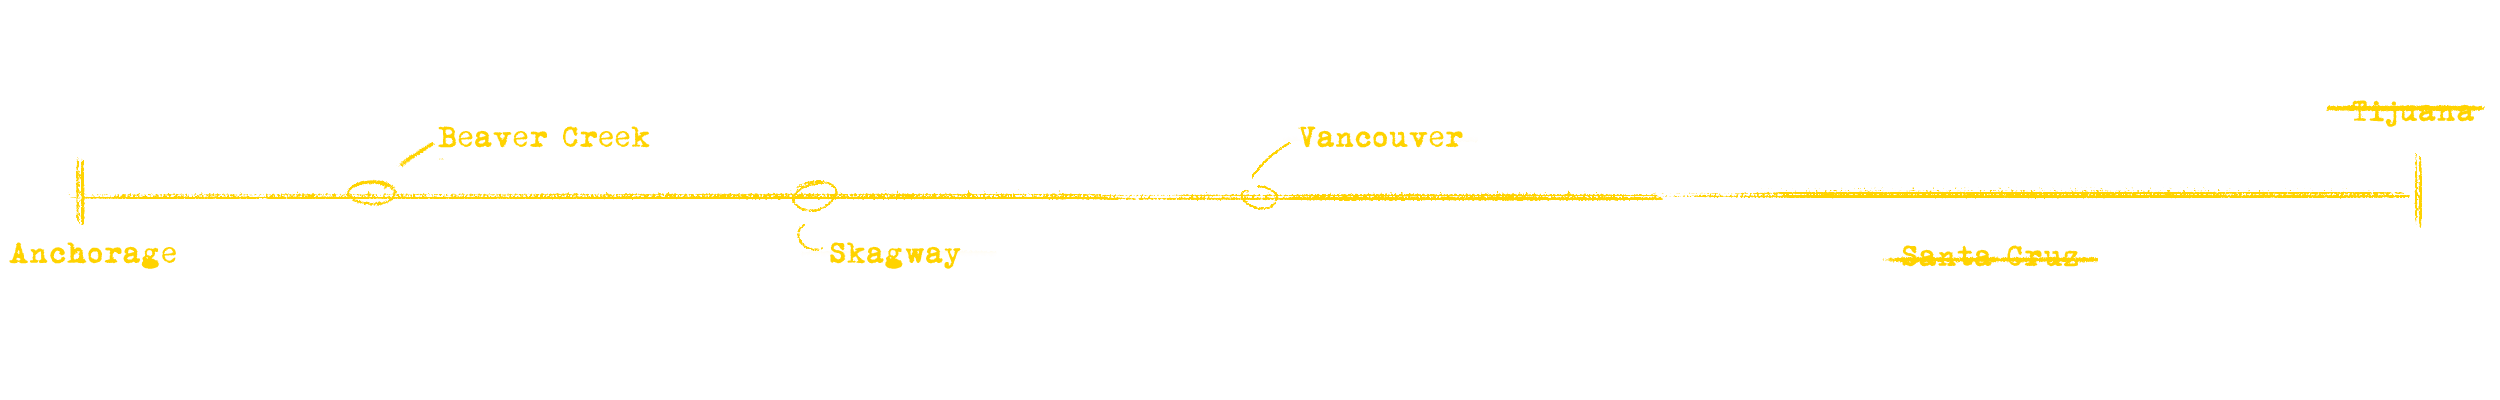 Timeline_03_Vancouver